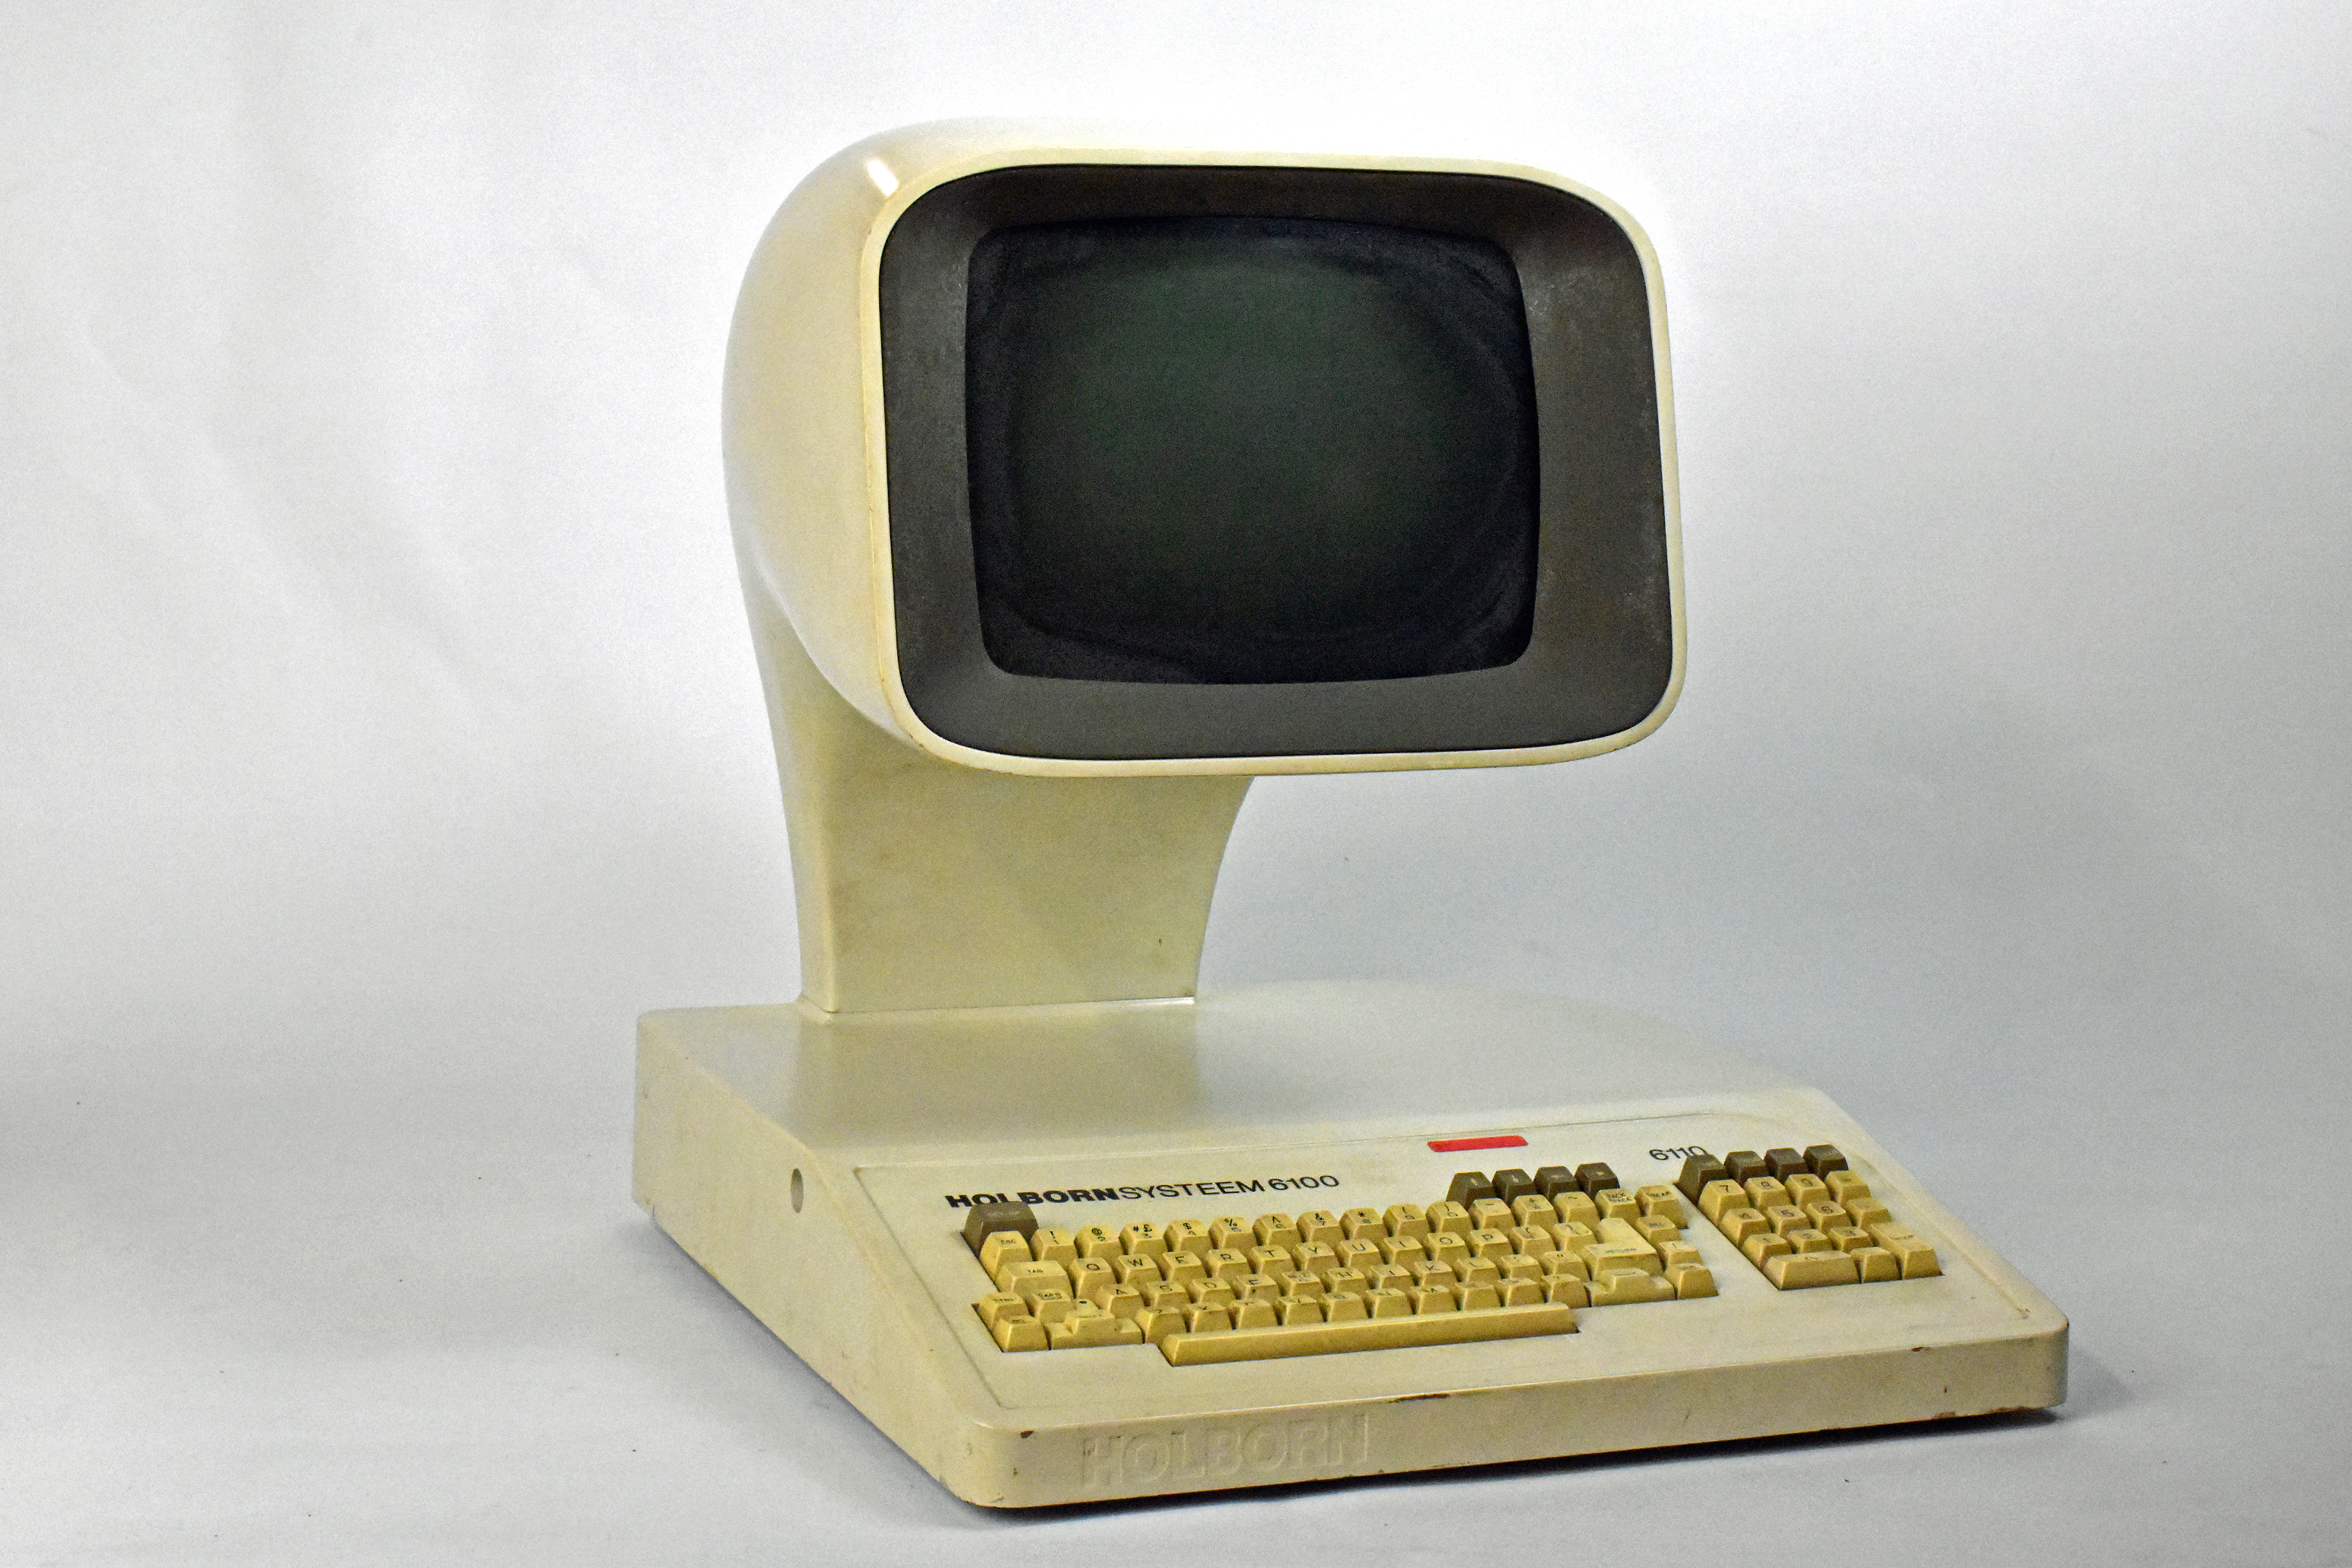 Holborn computer